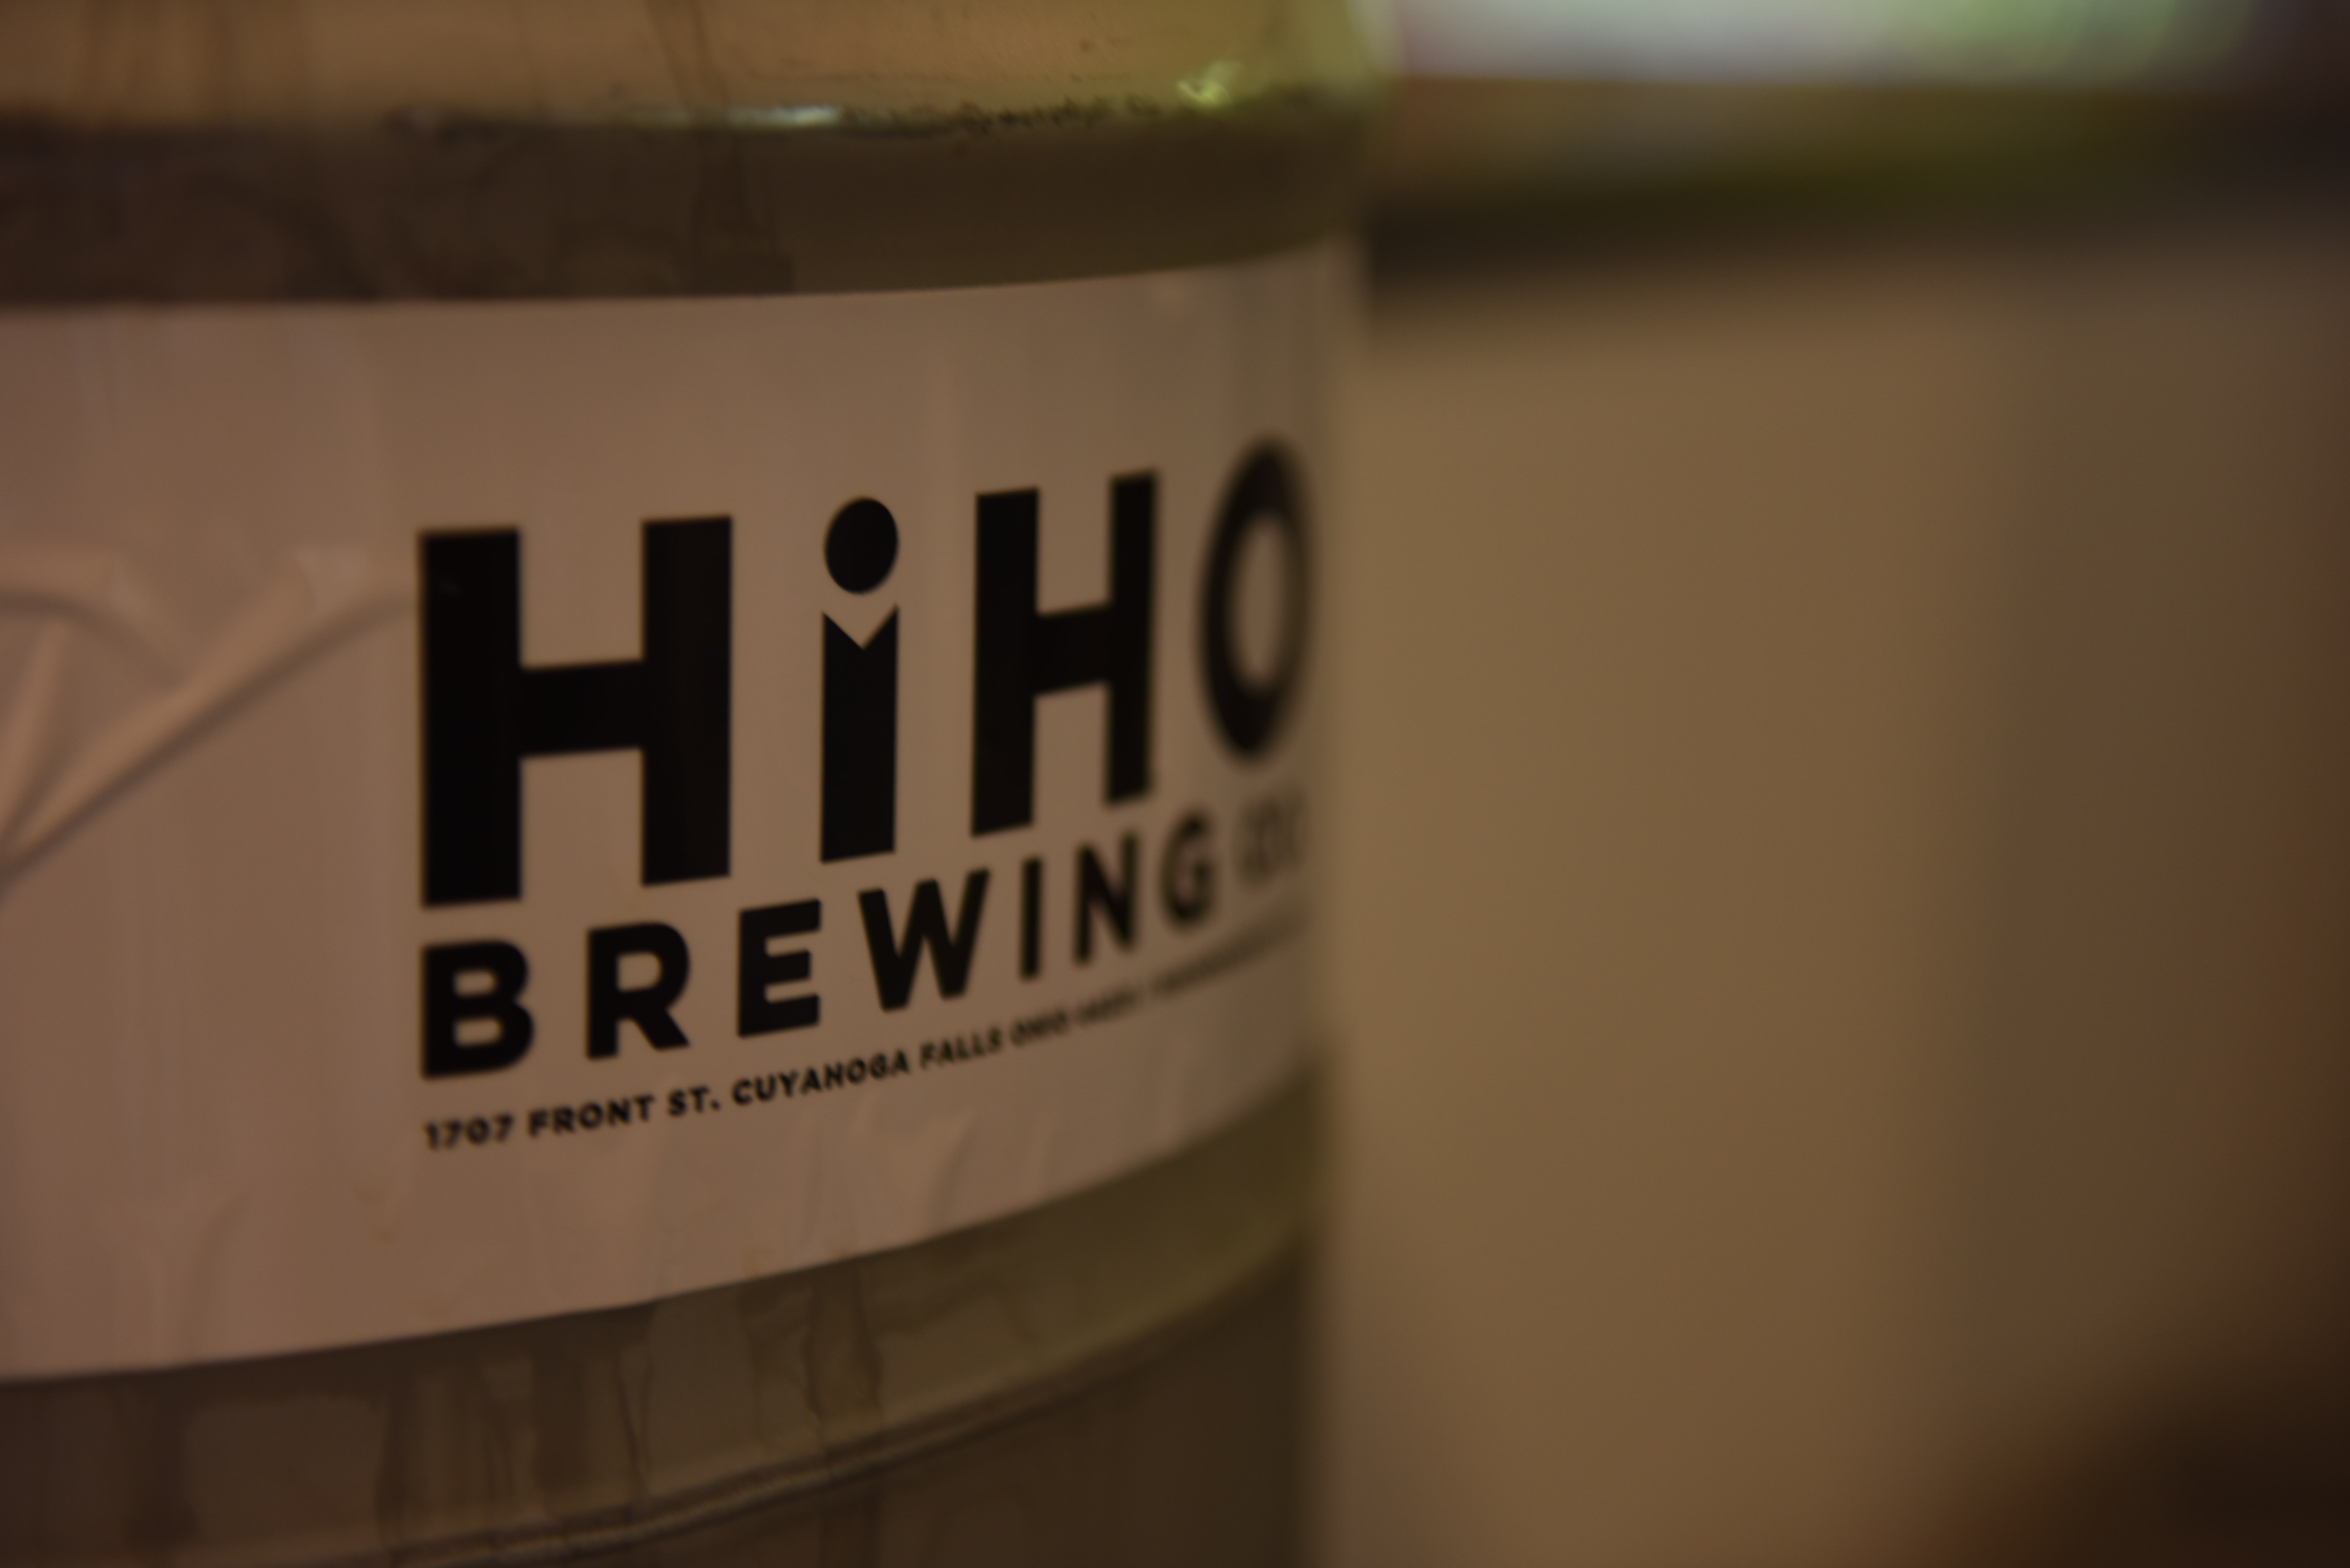 hiho-brewing-beer-maker